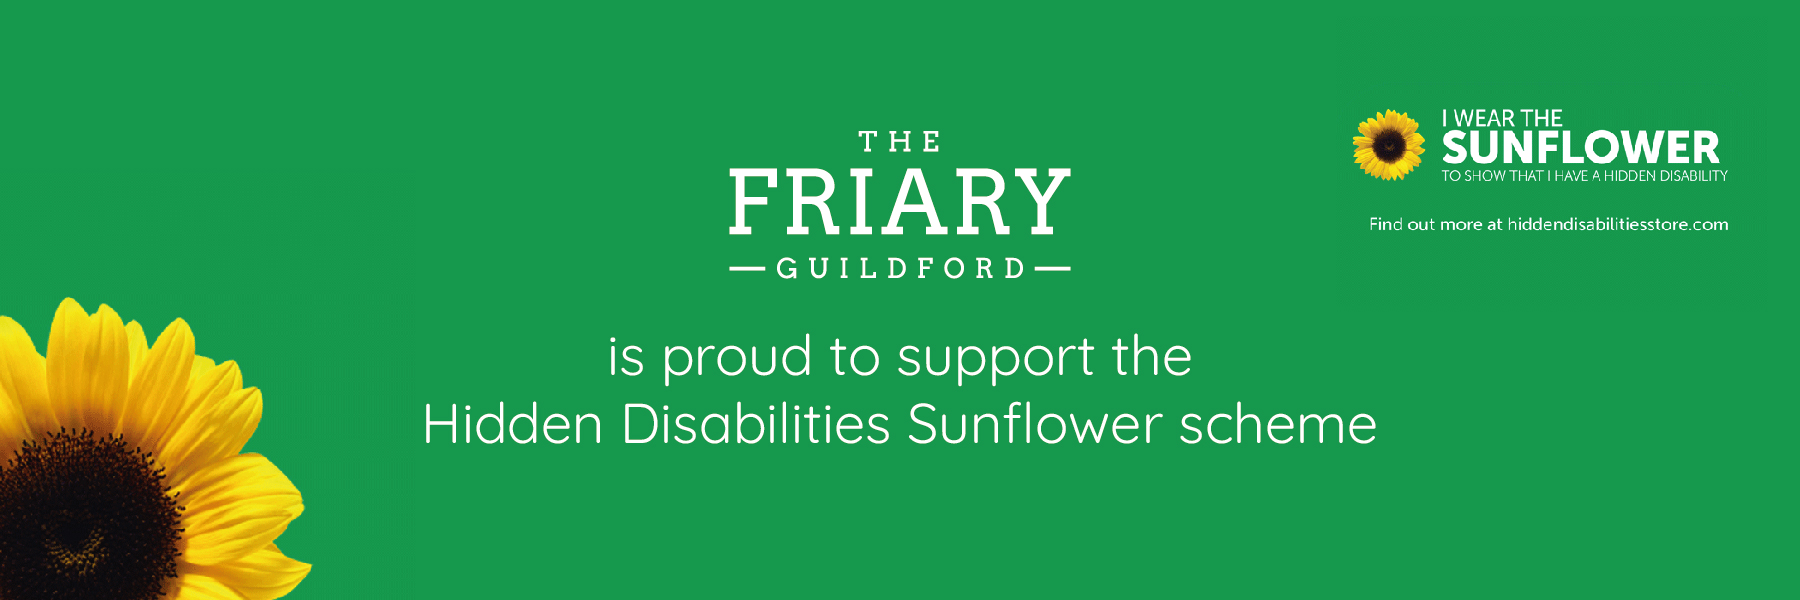 We’re proud to support the Hidden Disabilities Sunflower scheme